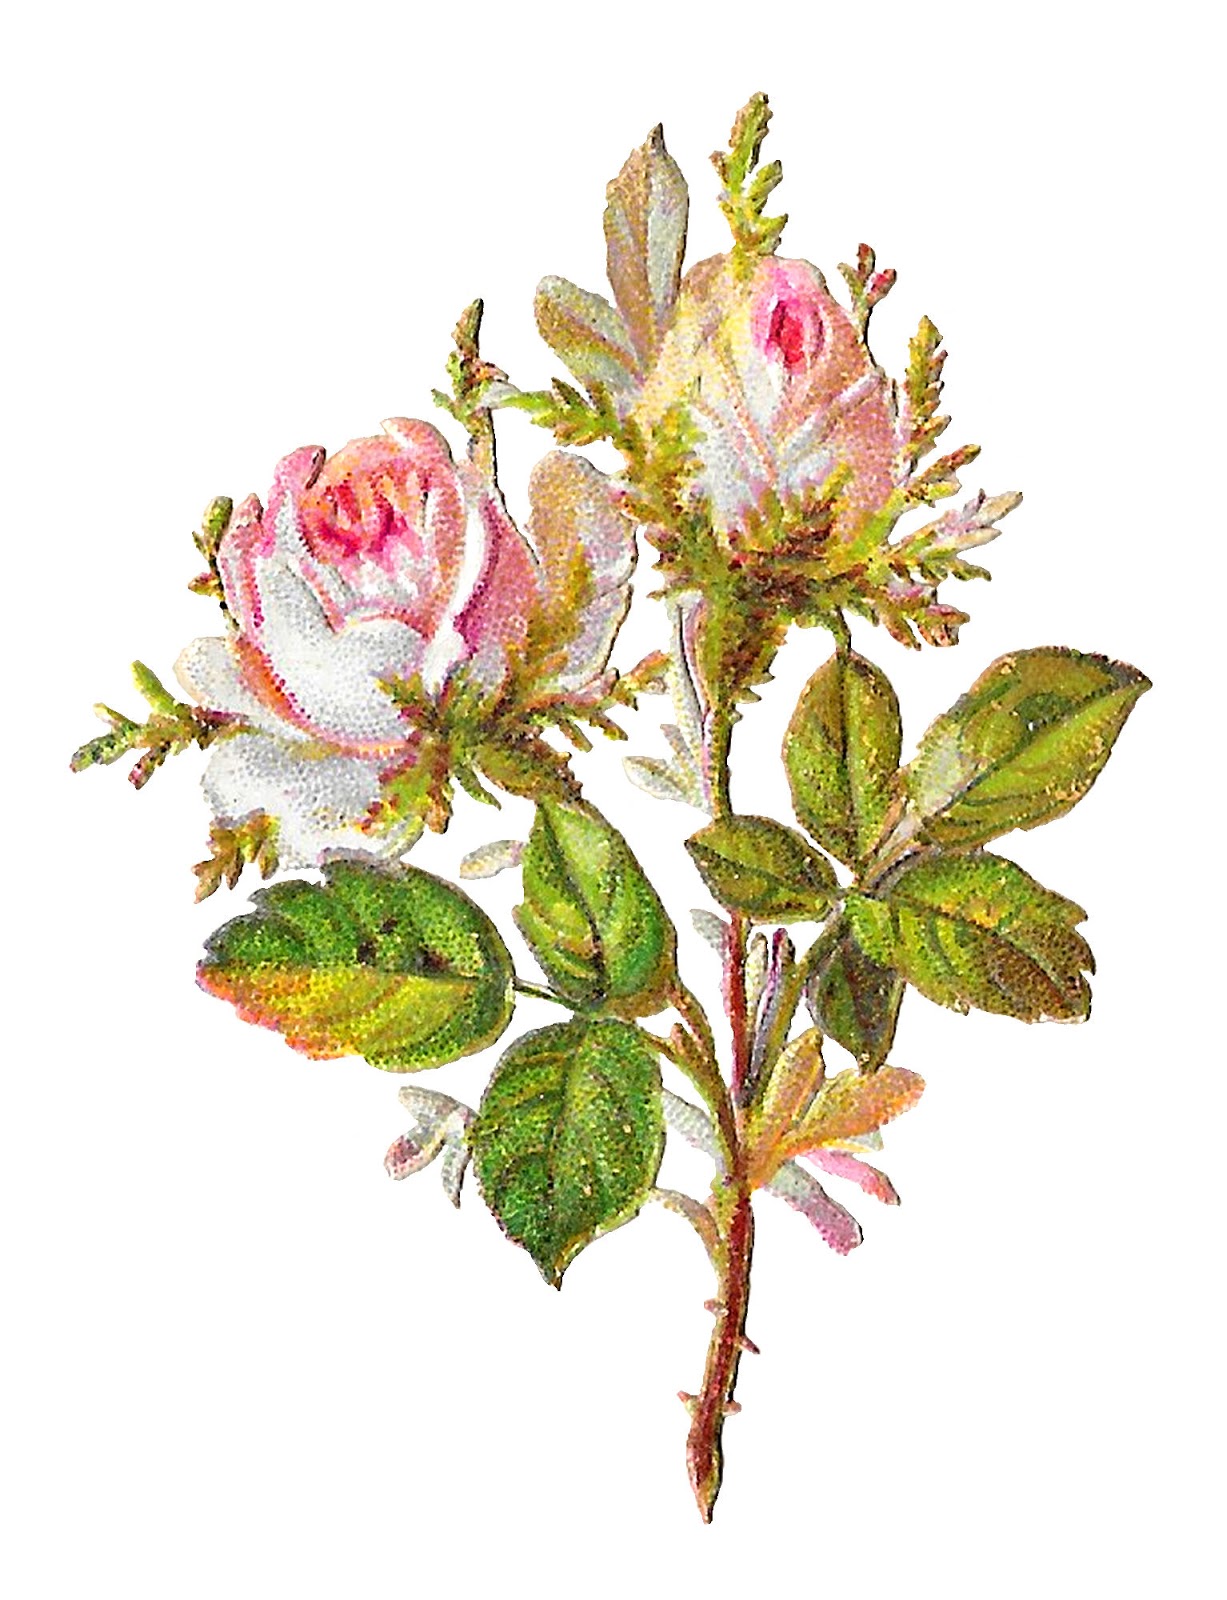 Antique Images: Shabby Chic White Rose Vintage Clipart Botanical Art ...